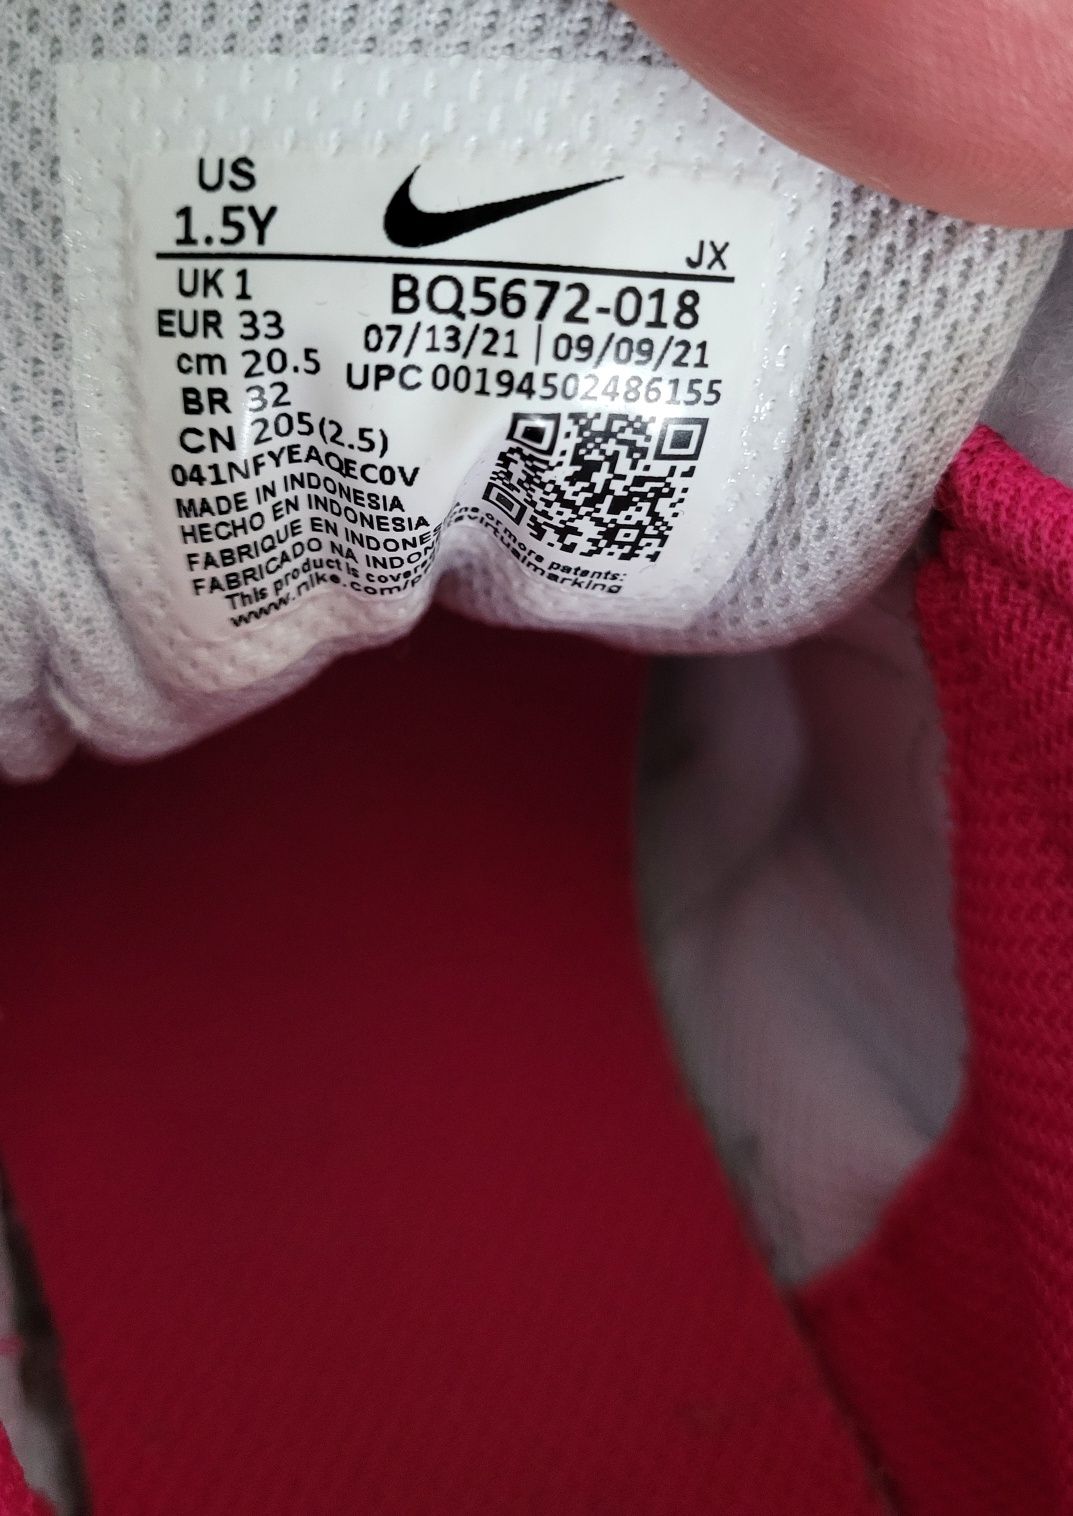 Nike Revolution buciki rozmiar US 1,5Y EUR 33